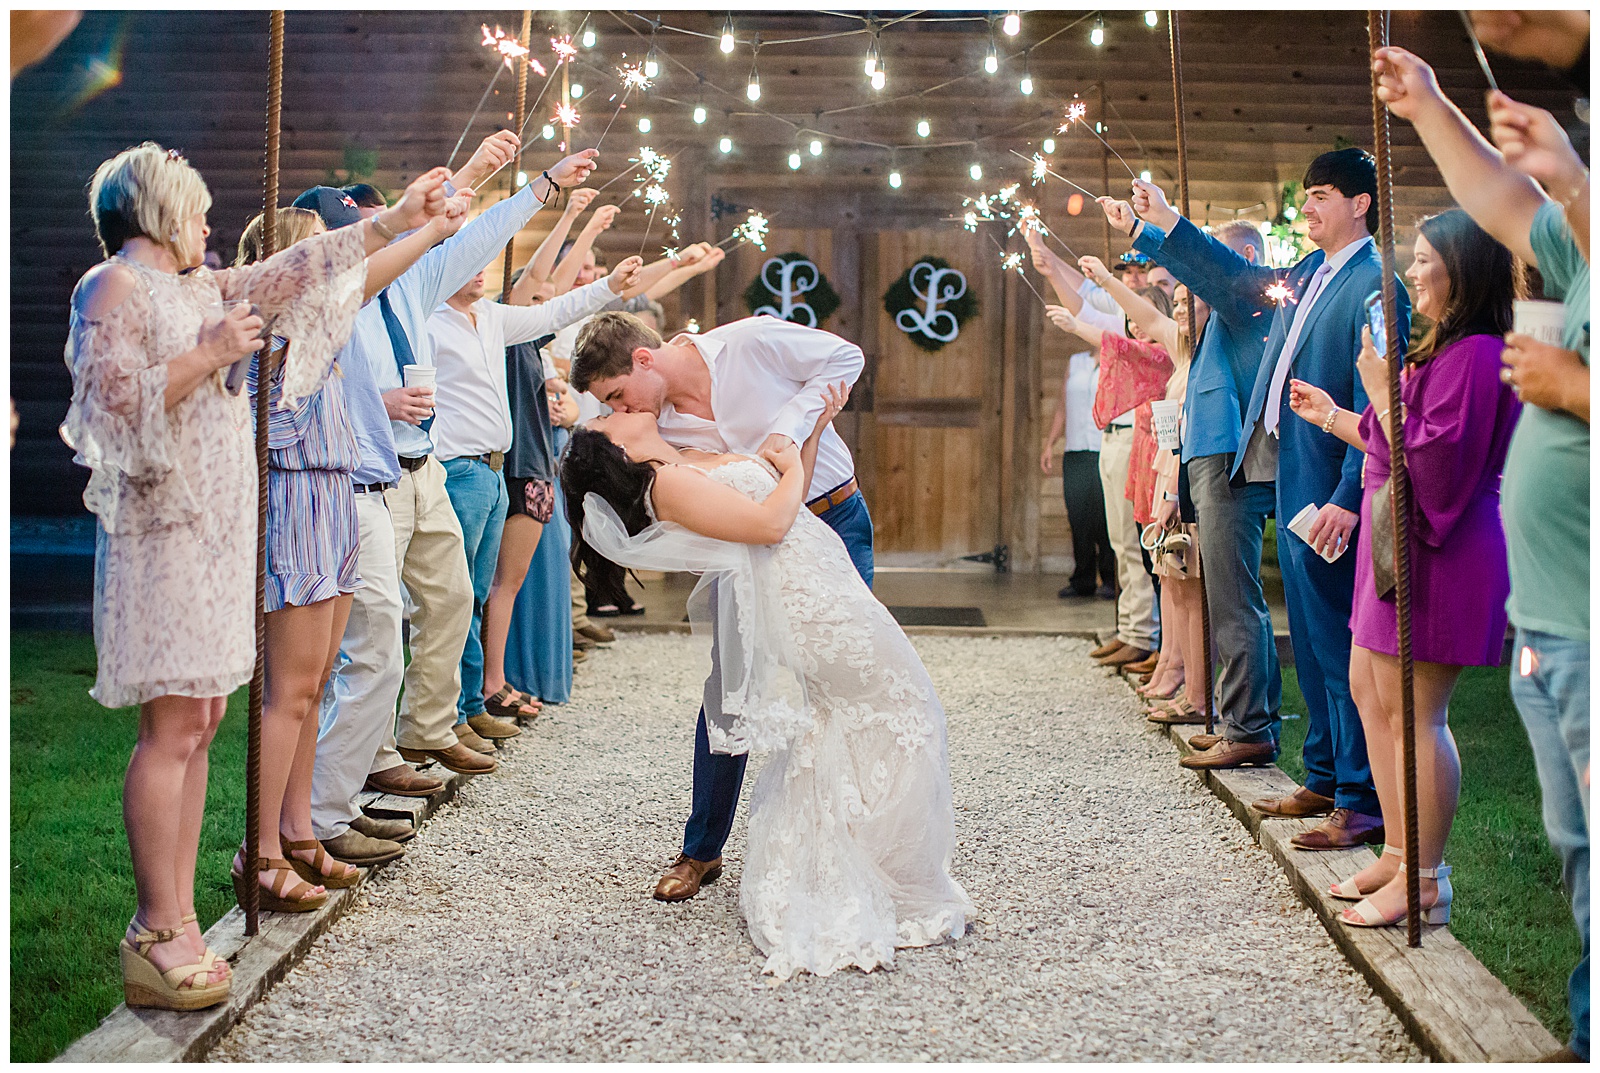 The Farm Wedding, Akron Alabama Wedding, Tuscaloosa Wedding, Tuscaloosa Wedding Photography, Birmingham Wedding Photographer